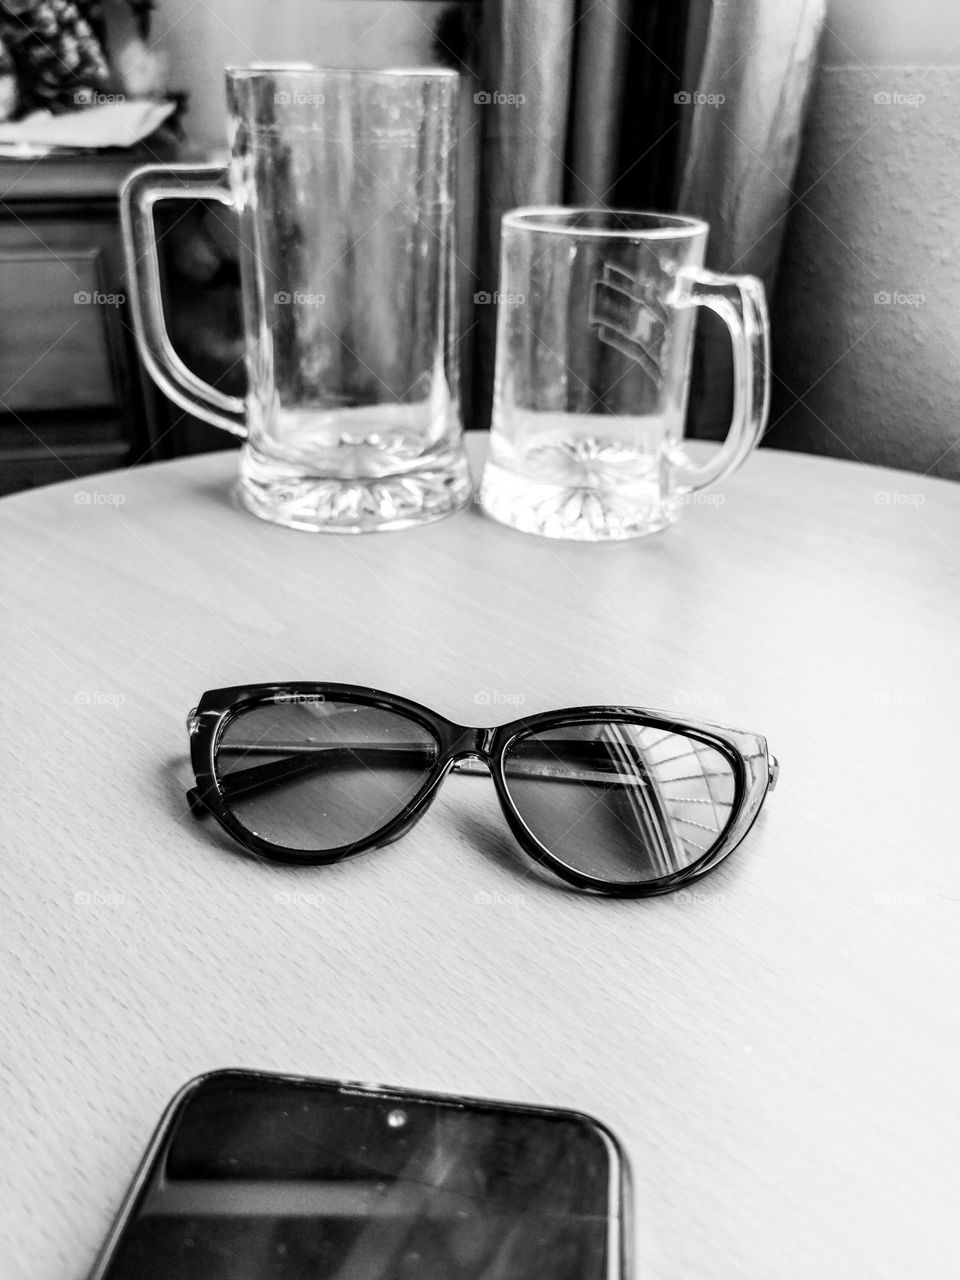 Phone, sunglasses, beer mugs still life